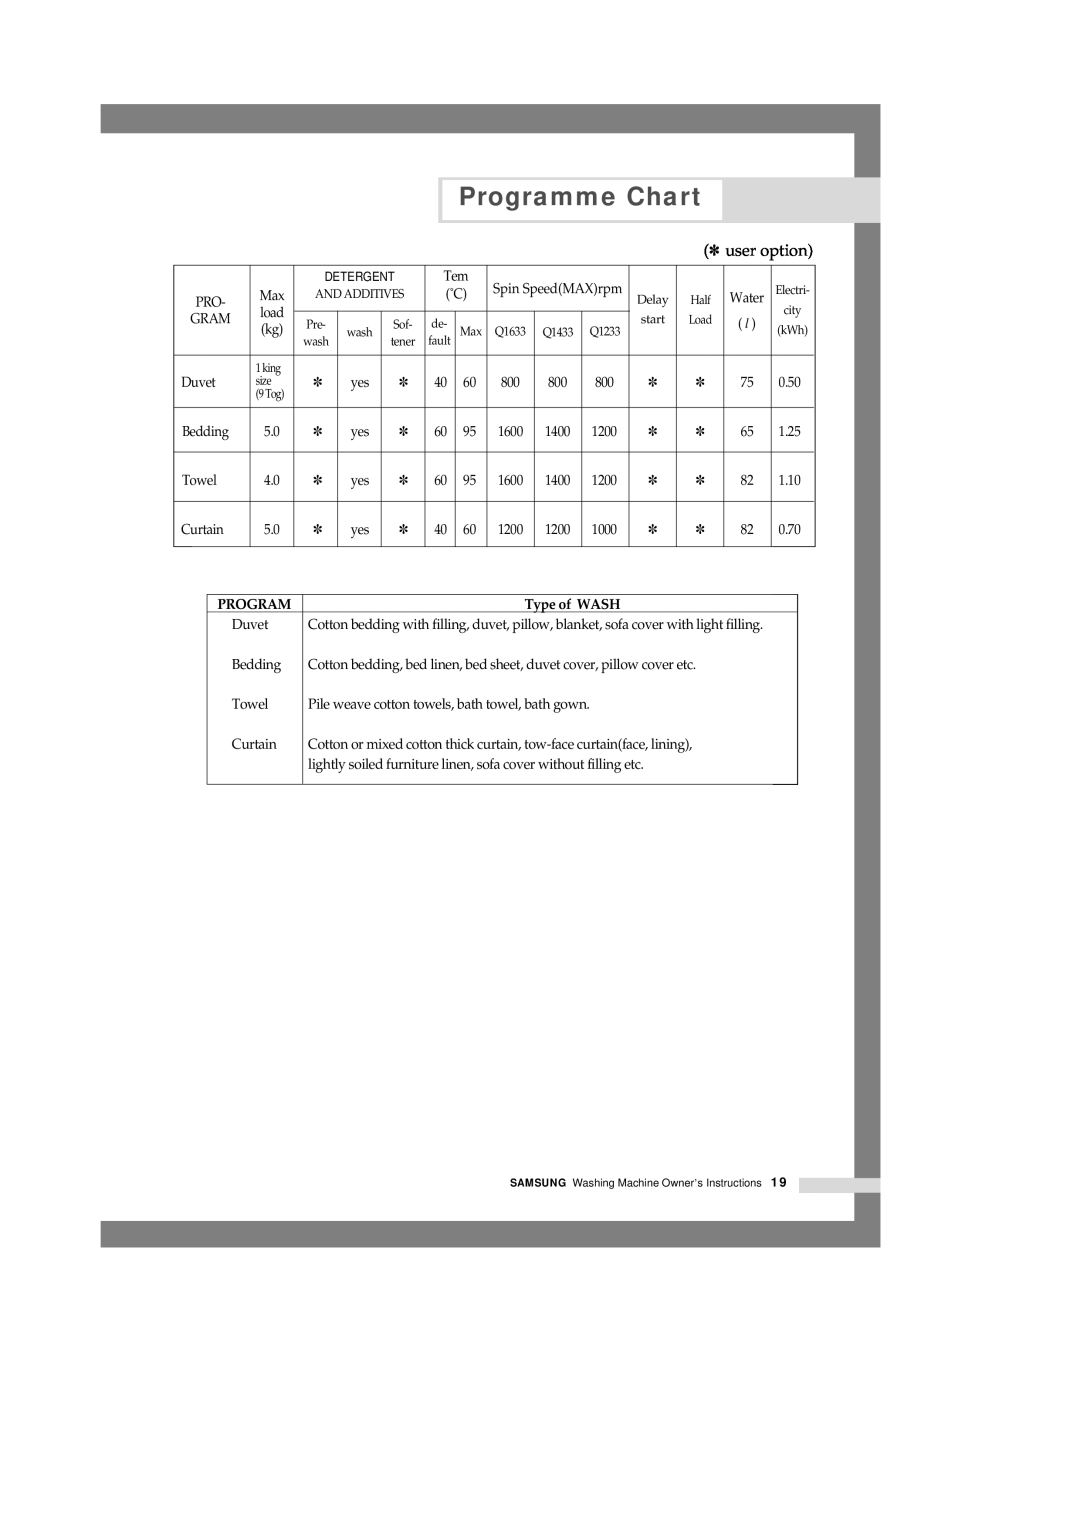 Samsung Q1433, Q1633, Q1233 manual Programme Chart, user option, Duvet, Type of WASH 